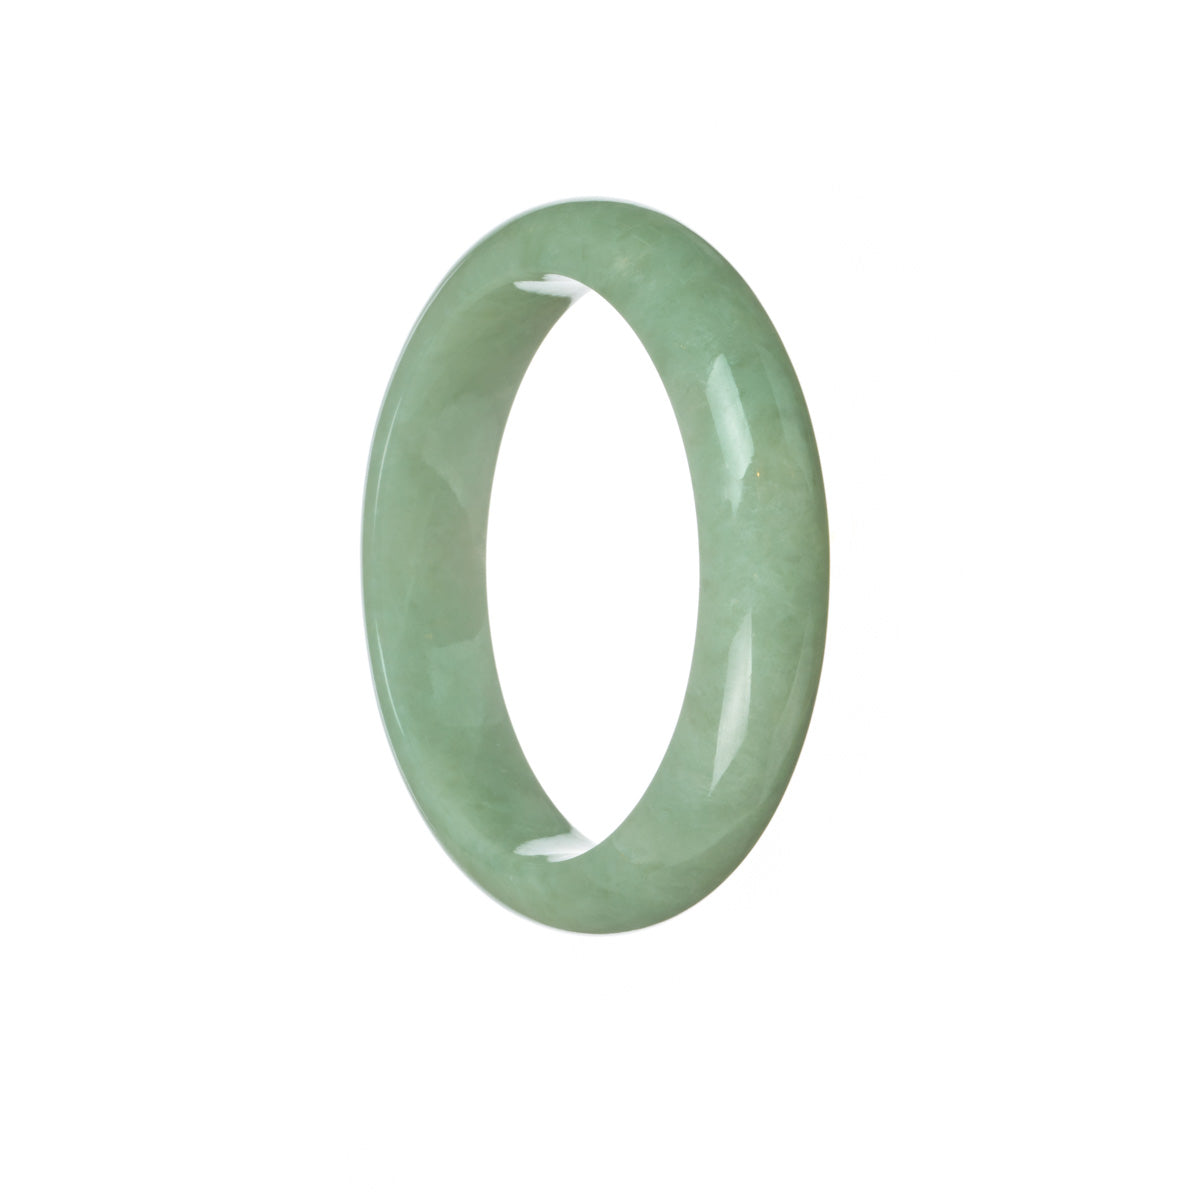 A light green Burmese jade bangle bracelet with a half moon design, measuring 55mm in diameter.